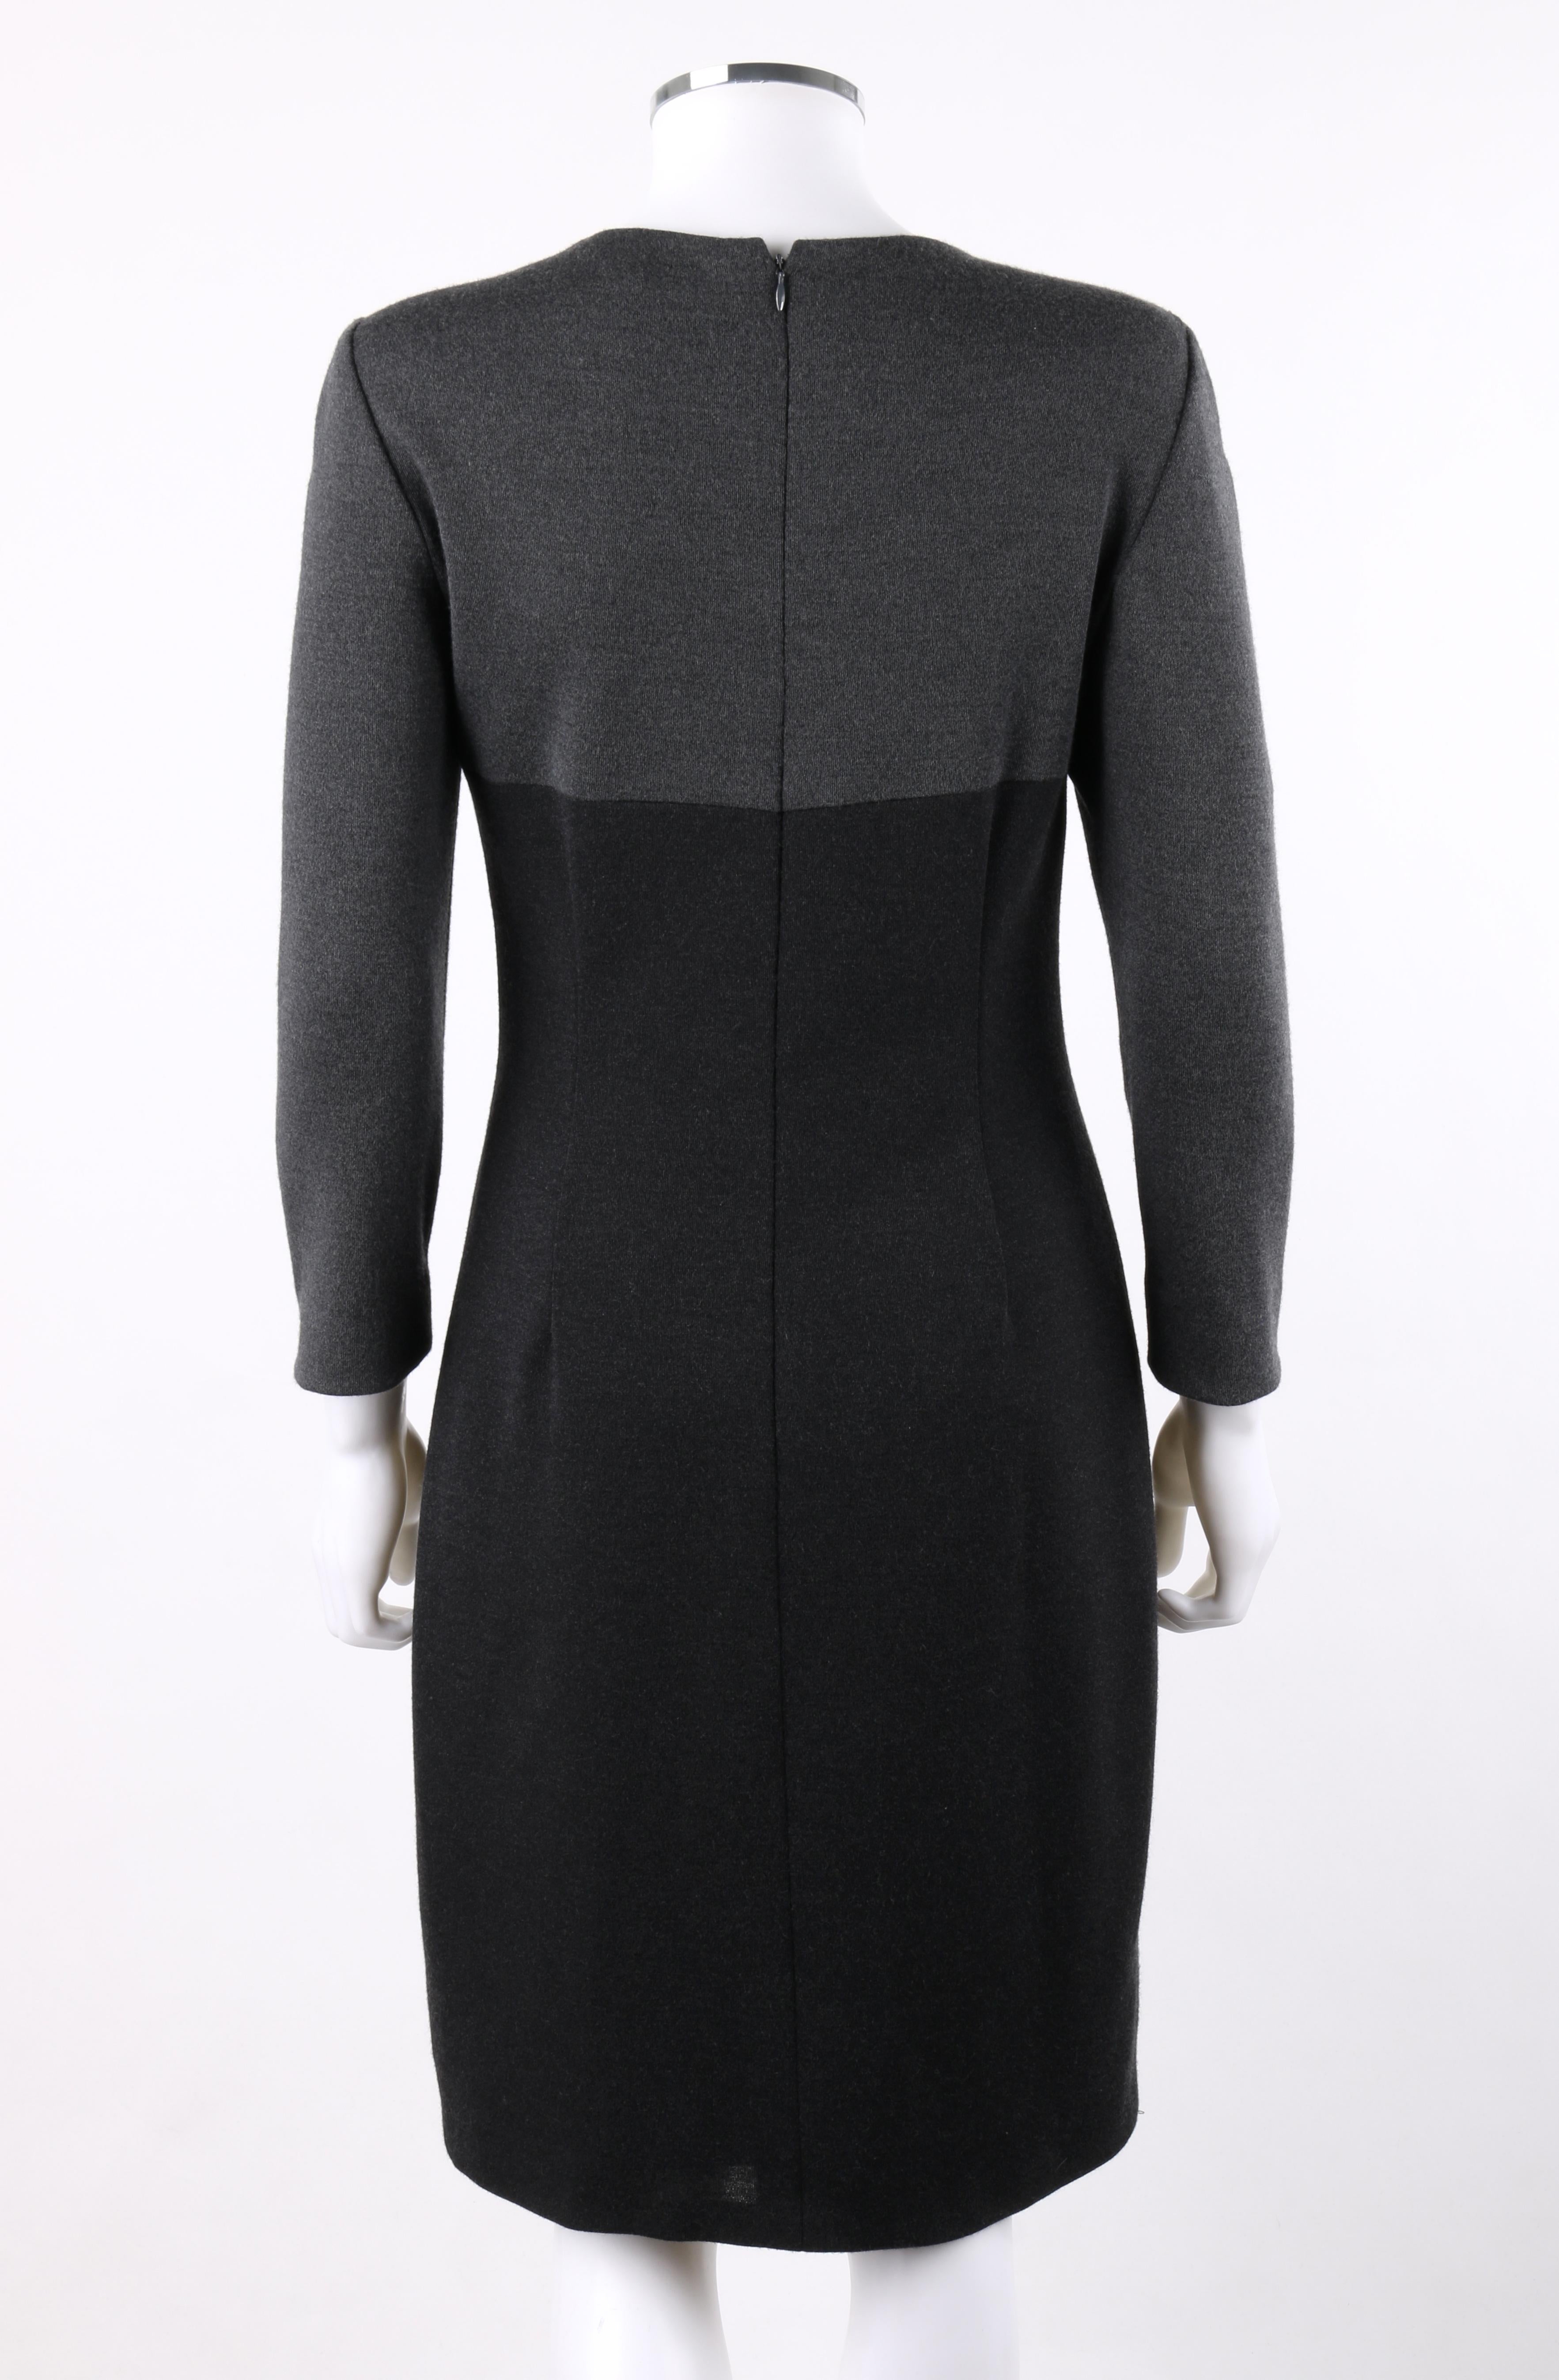 Women's BILL BLASS c.1980’s Gray Black Color Block Long Sleeve Fitted Knit Sheath Dress